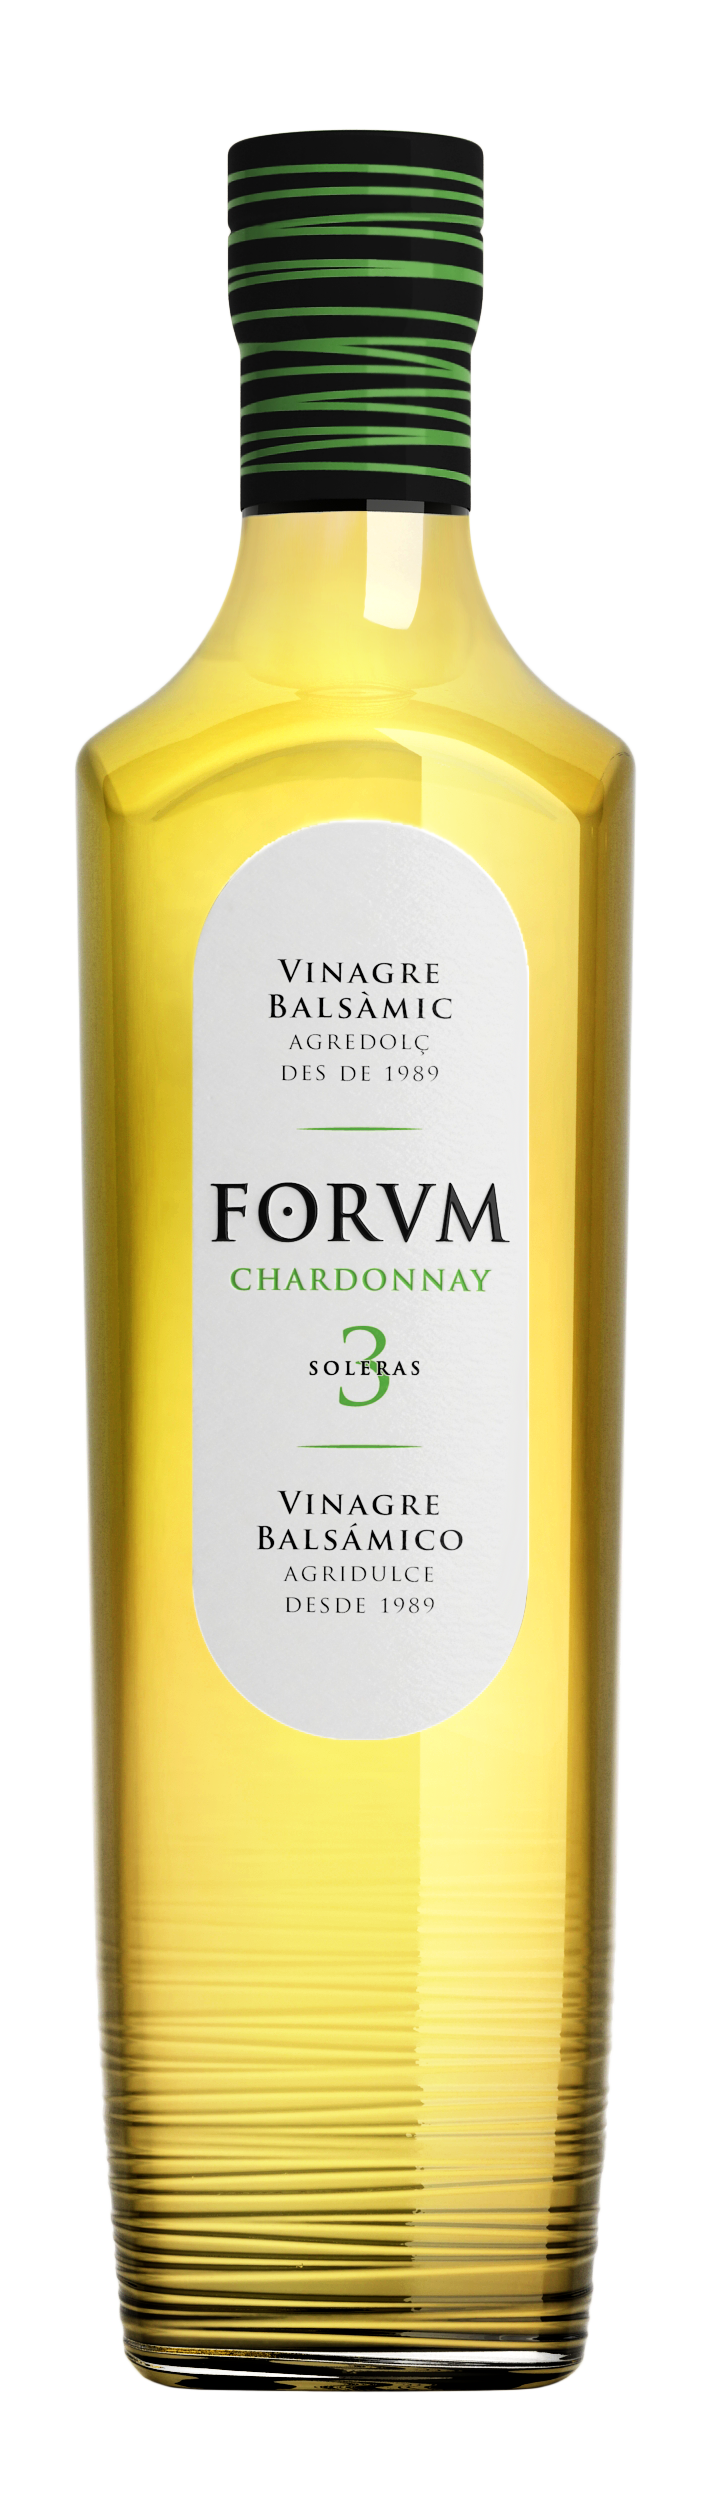 Balsamic Vinegar Chardonnay 50cl Forum